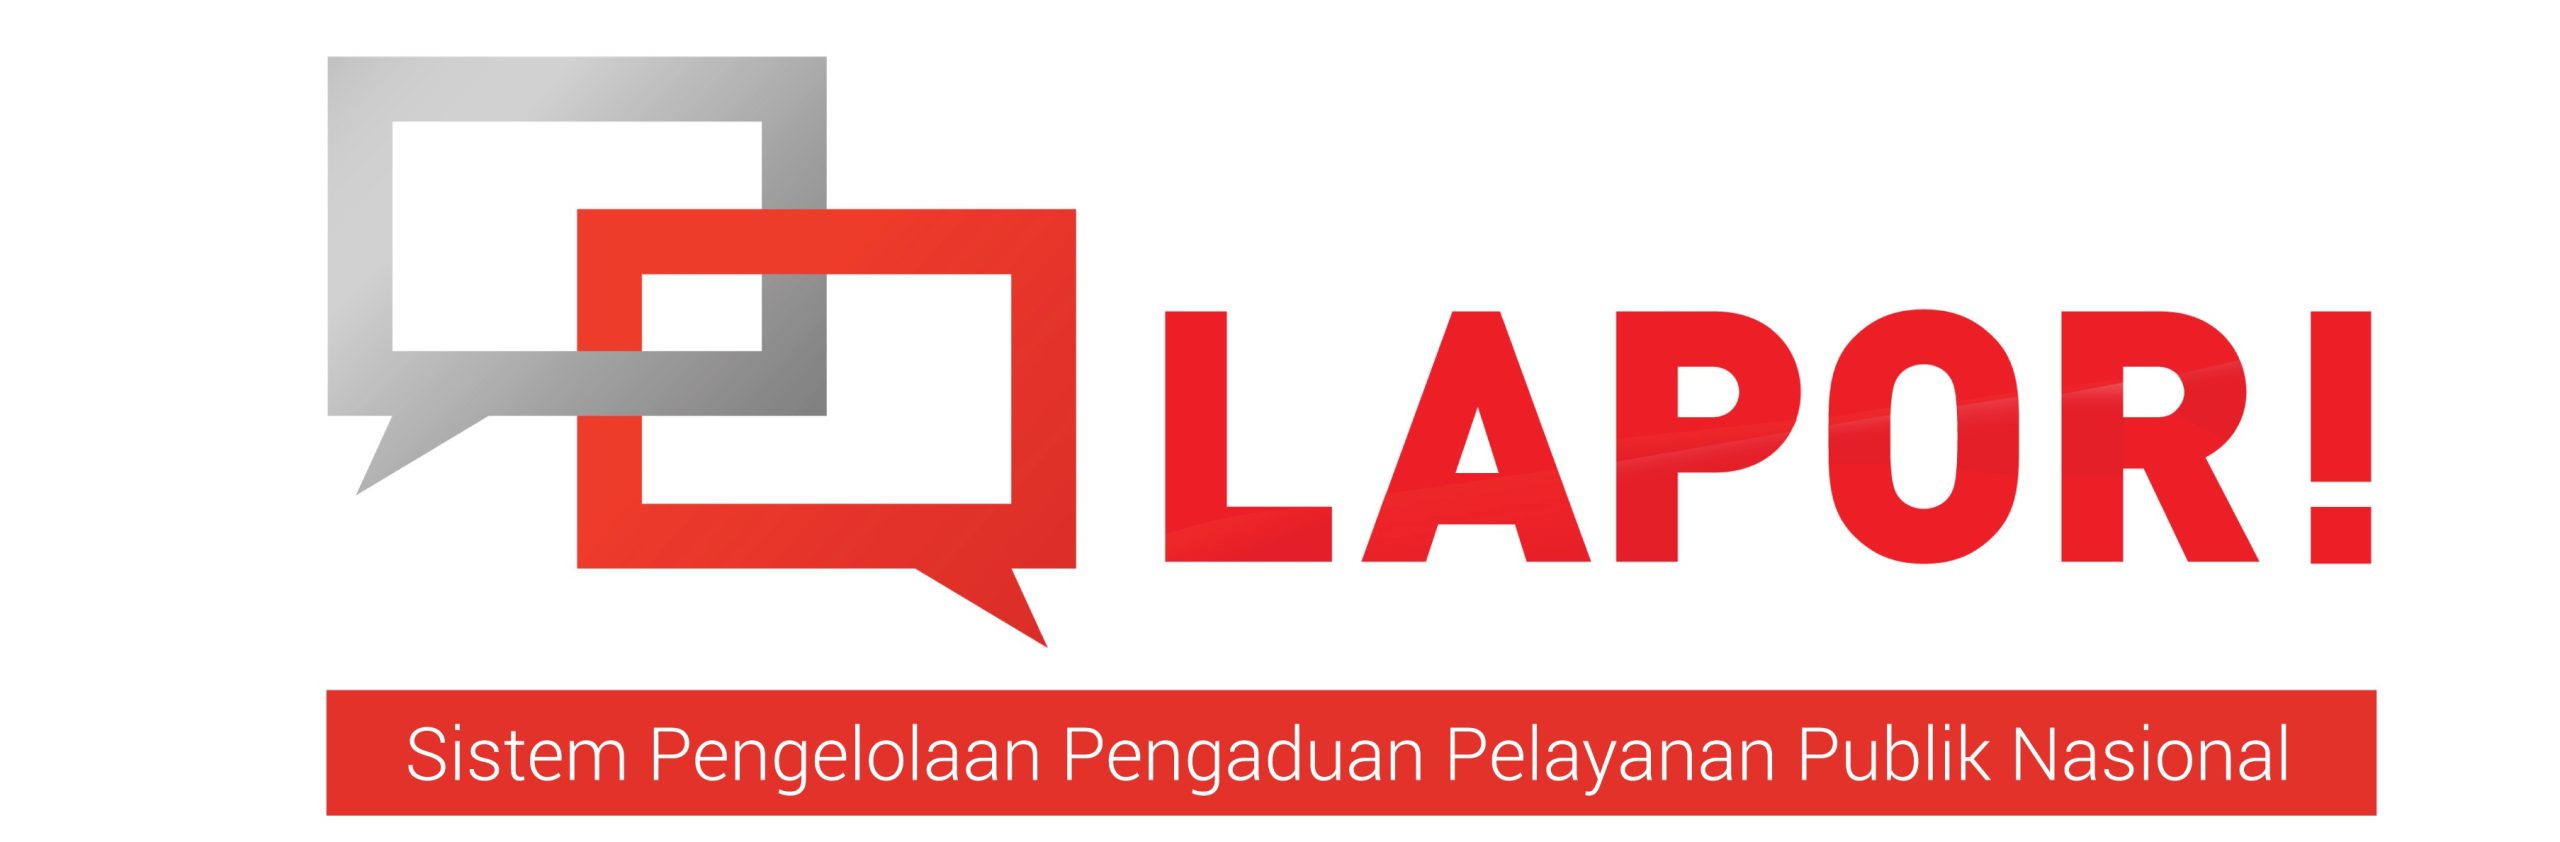 logo_sp4n_lapor